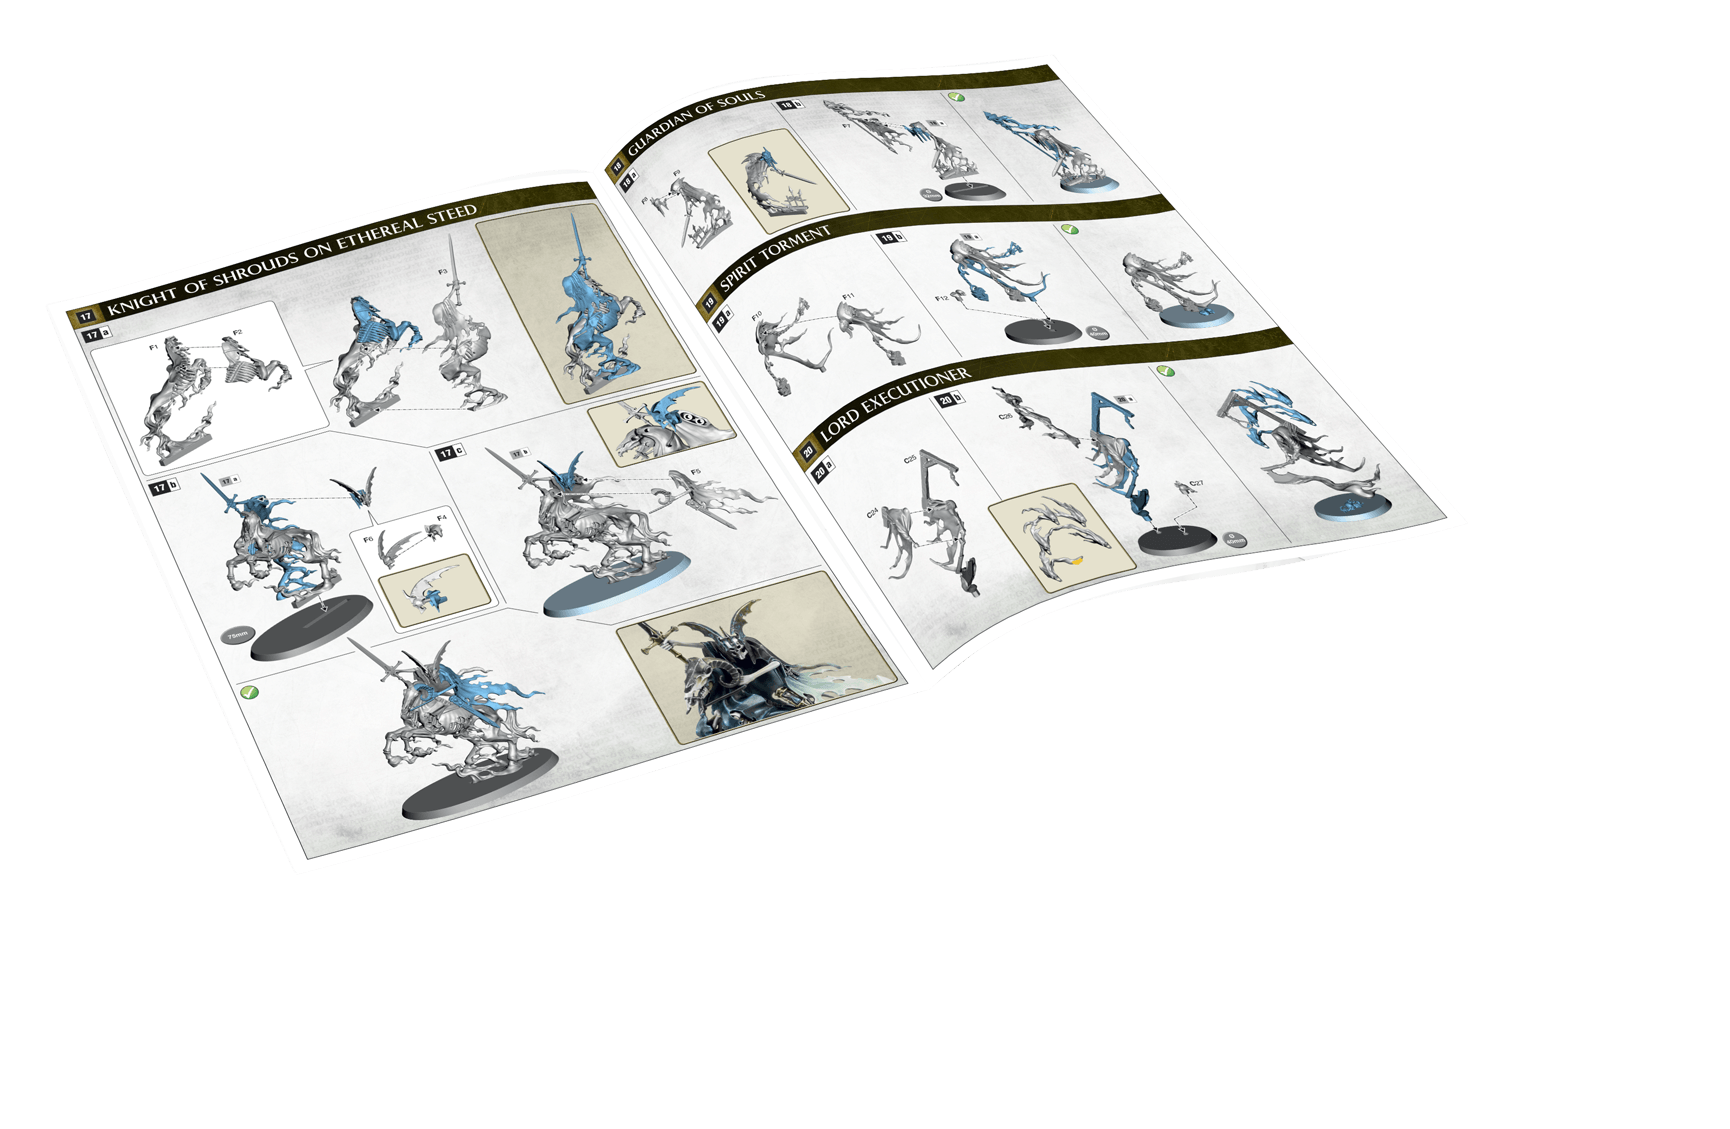 Warhammer Age of Sigmar Starter Set Guides